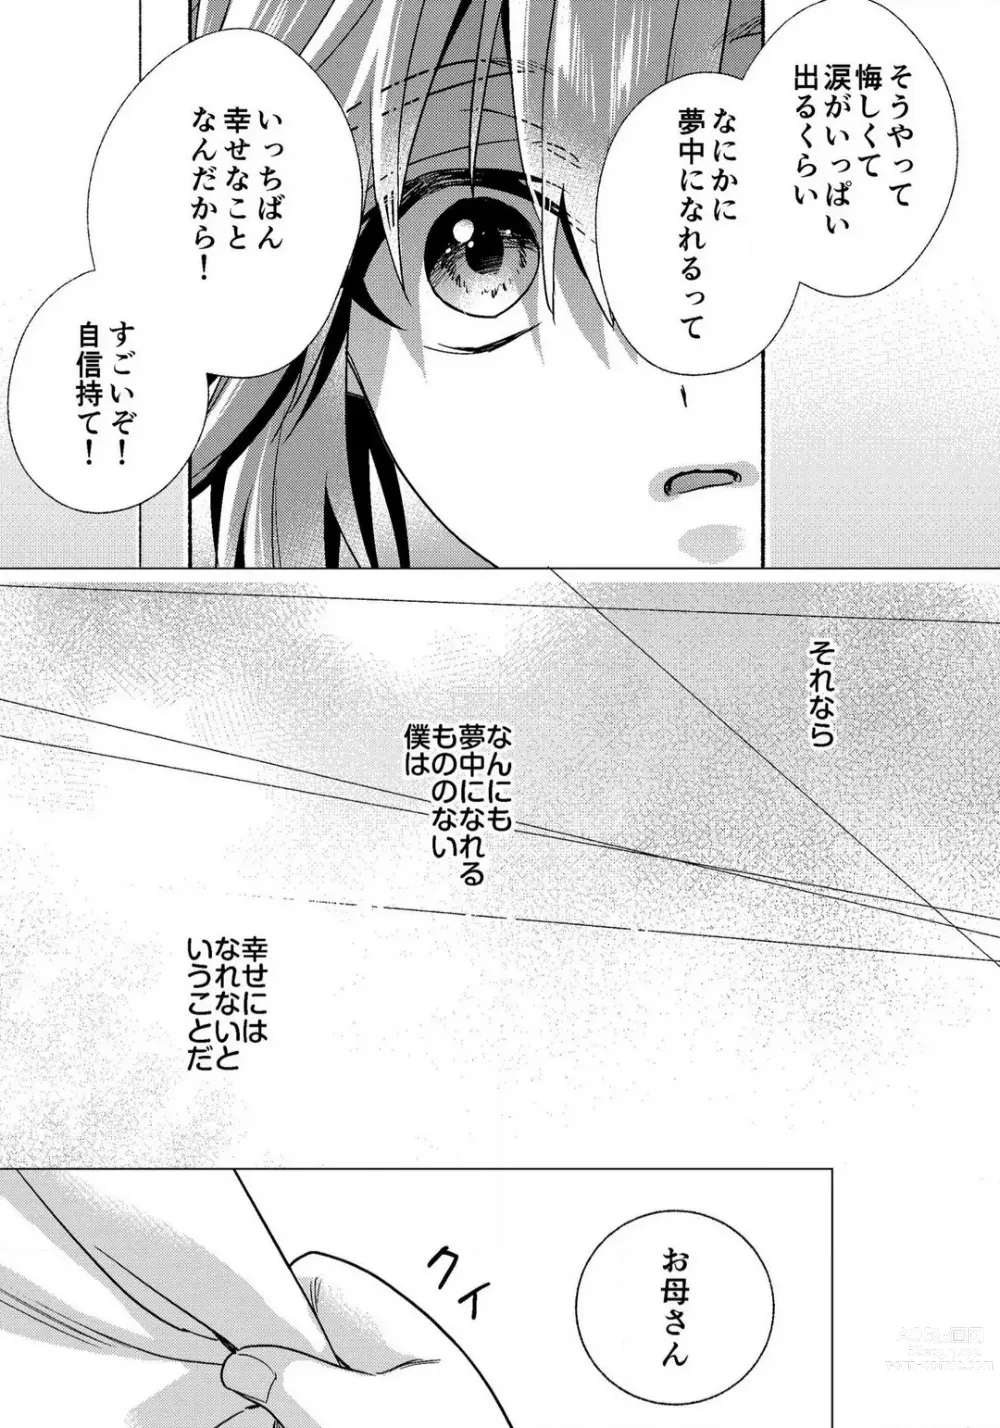 Page 13 of manga Ijimerare - Onna